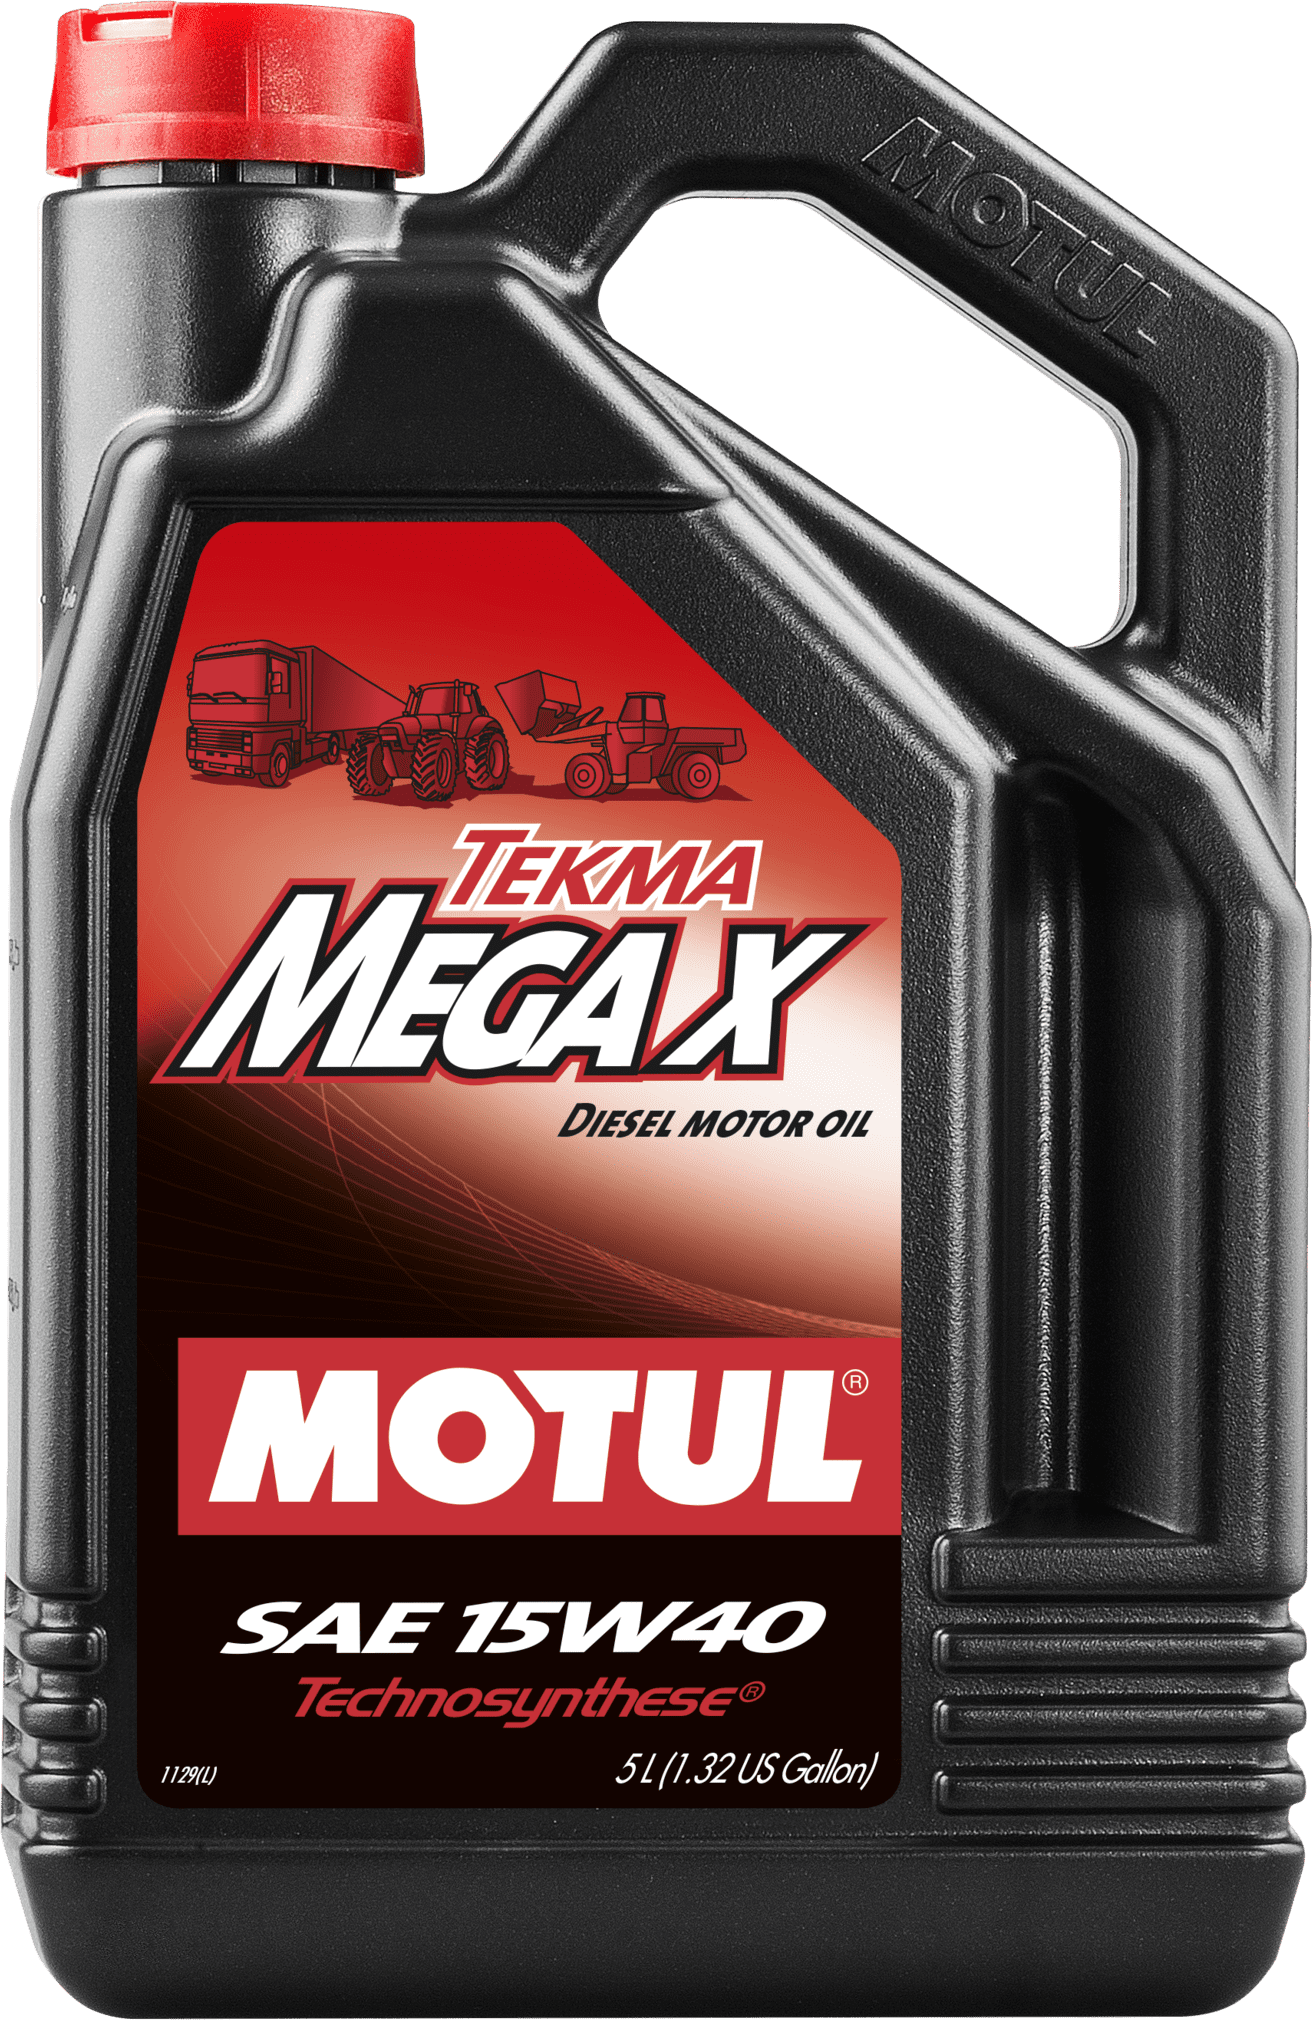 Motul Tekma Mega X 15W-40, 5 lt